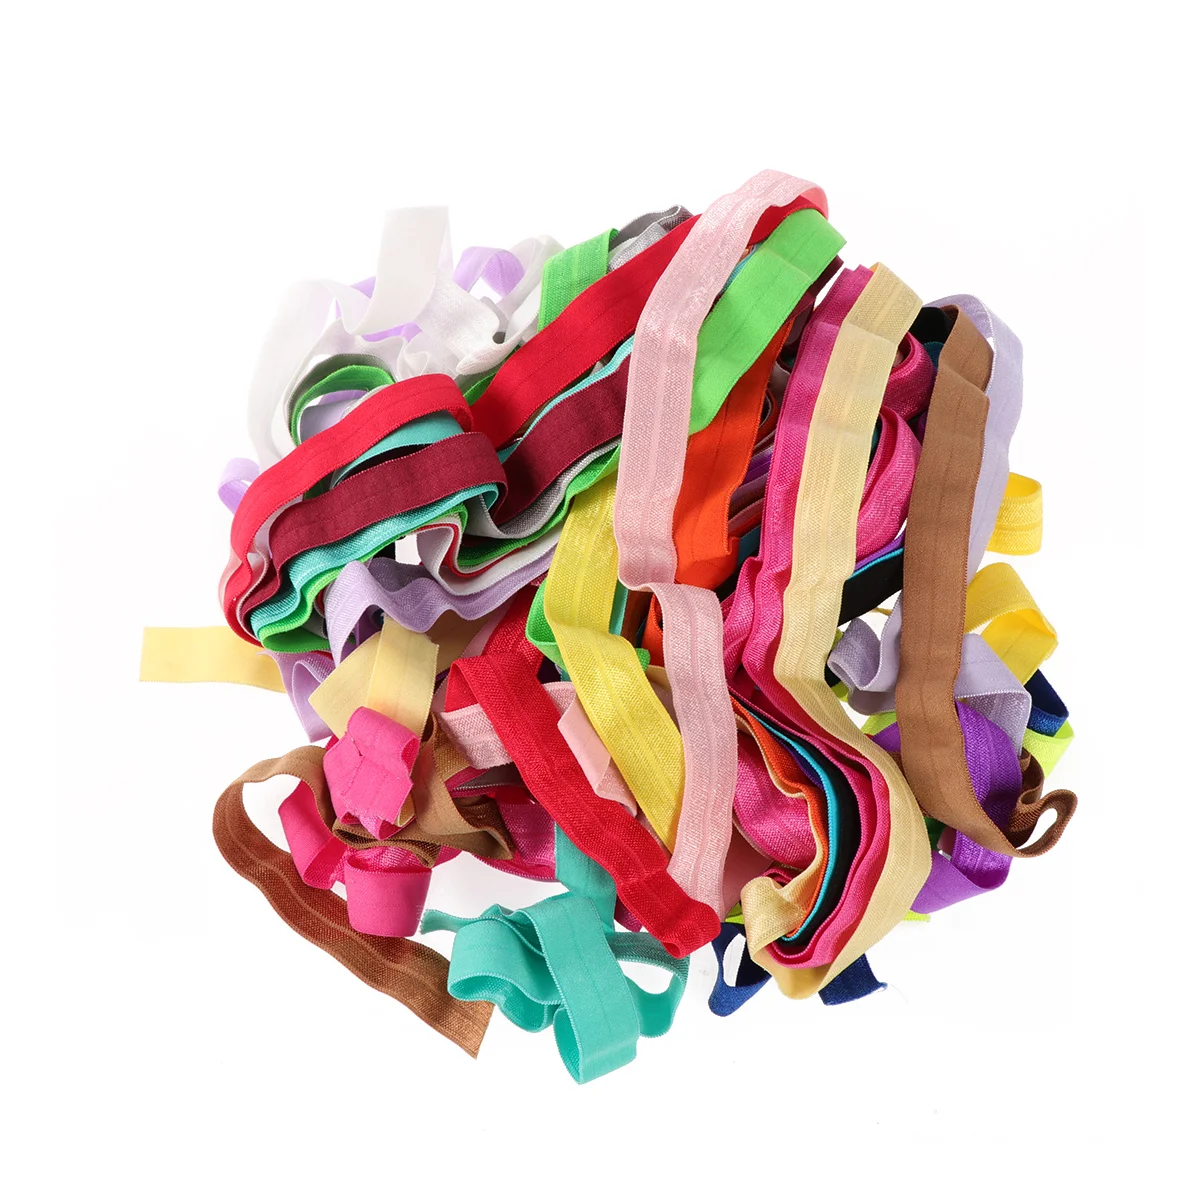 

15 Pcs Ribbons Crafts Knitting Elastic Band White Earrings Colored Knitted Headband Ponytail Ribbon Elastic Foldover